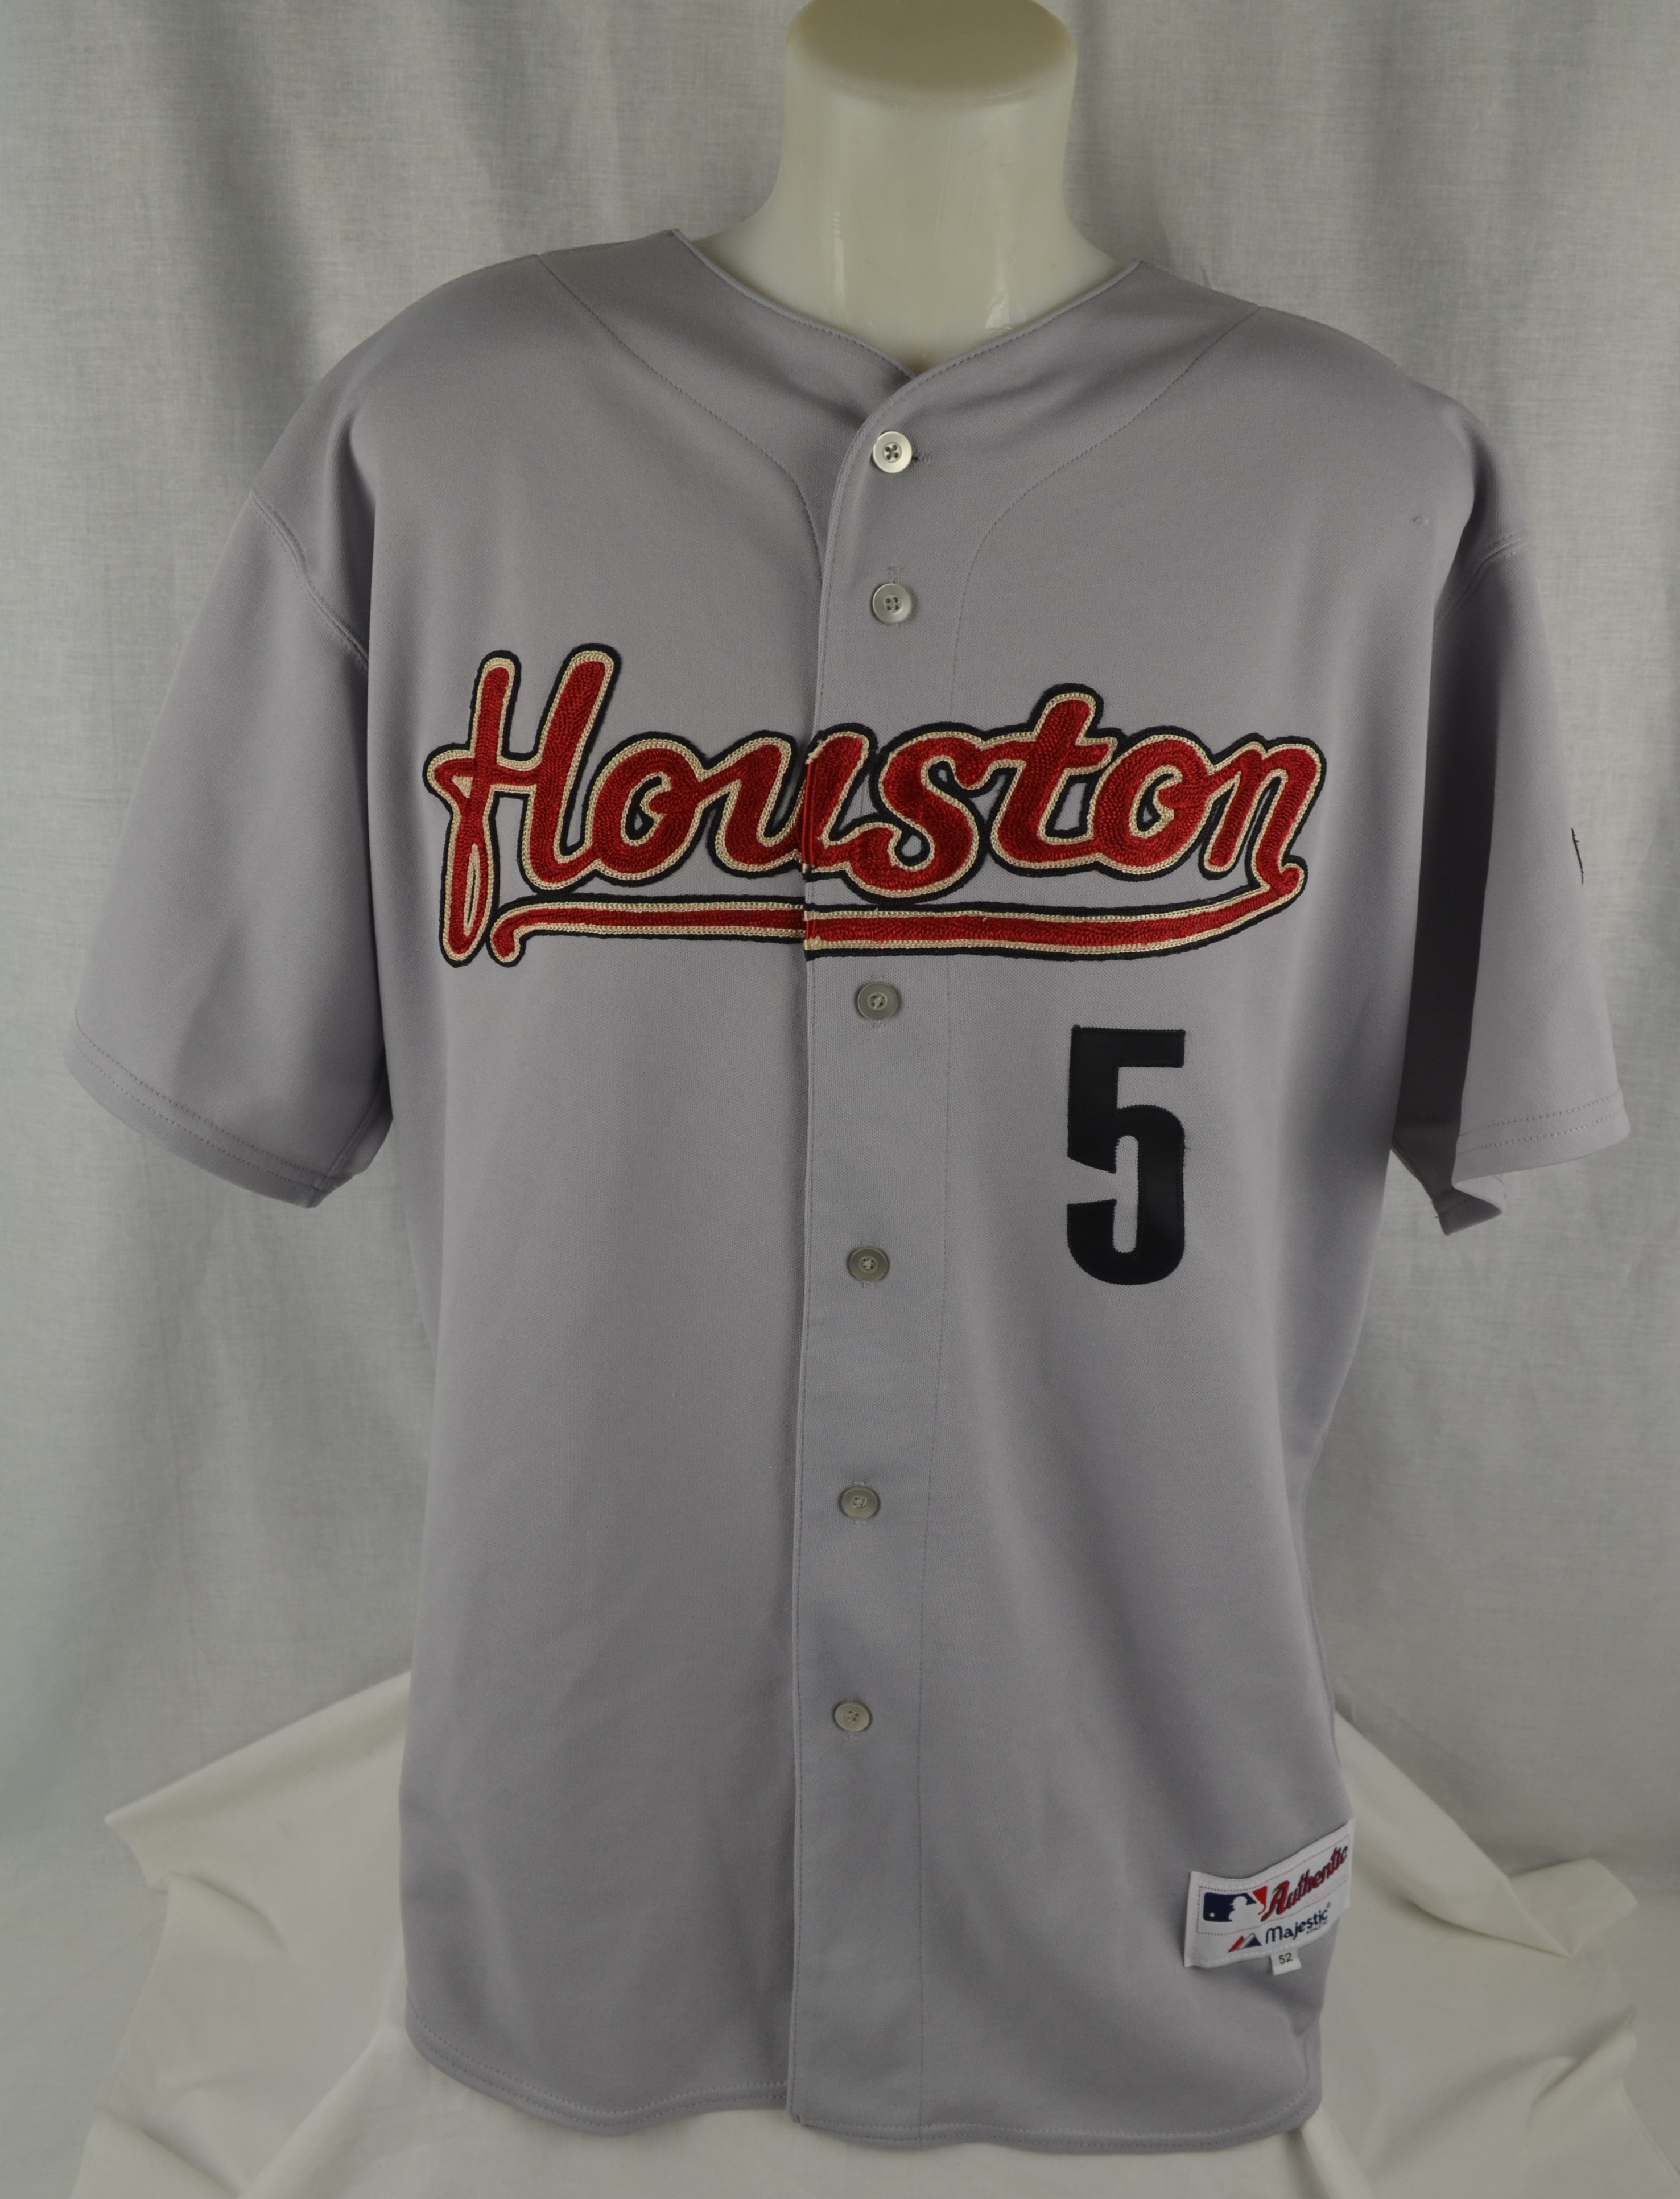 2006 Jeff Bagwell Game Worn Houston Astros Jersey.  Baseball